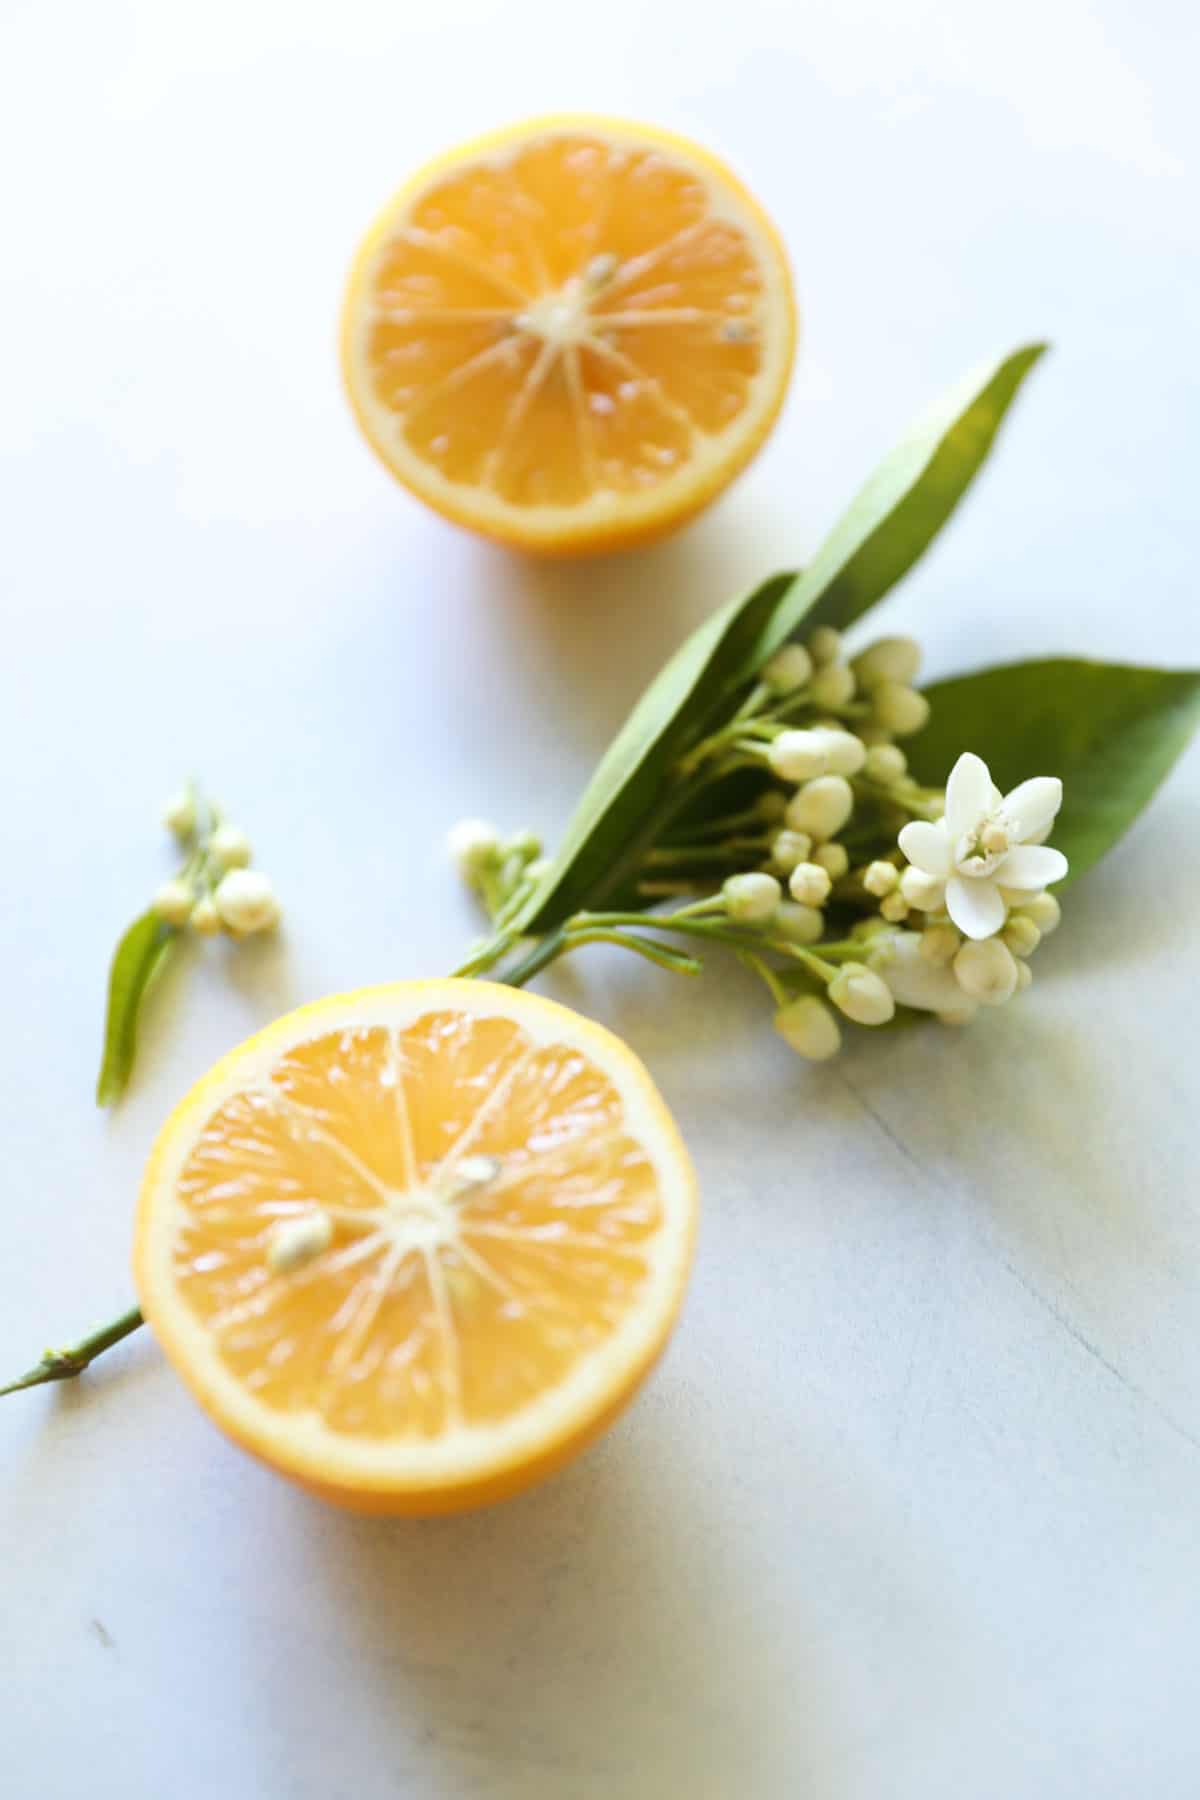 a sliced lemon with flowering citrus blossoms